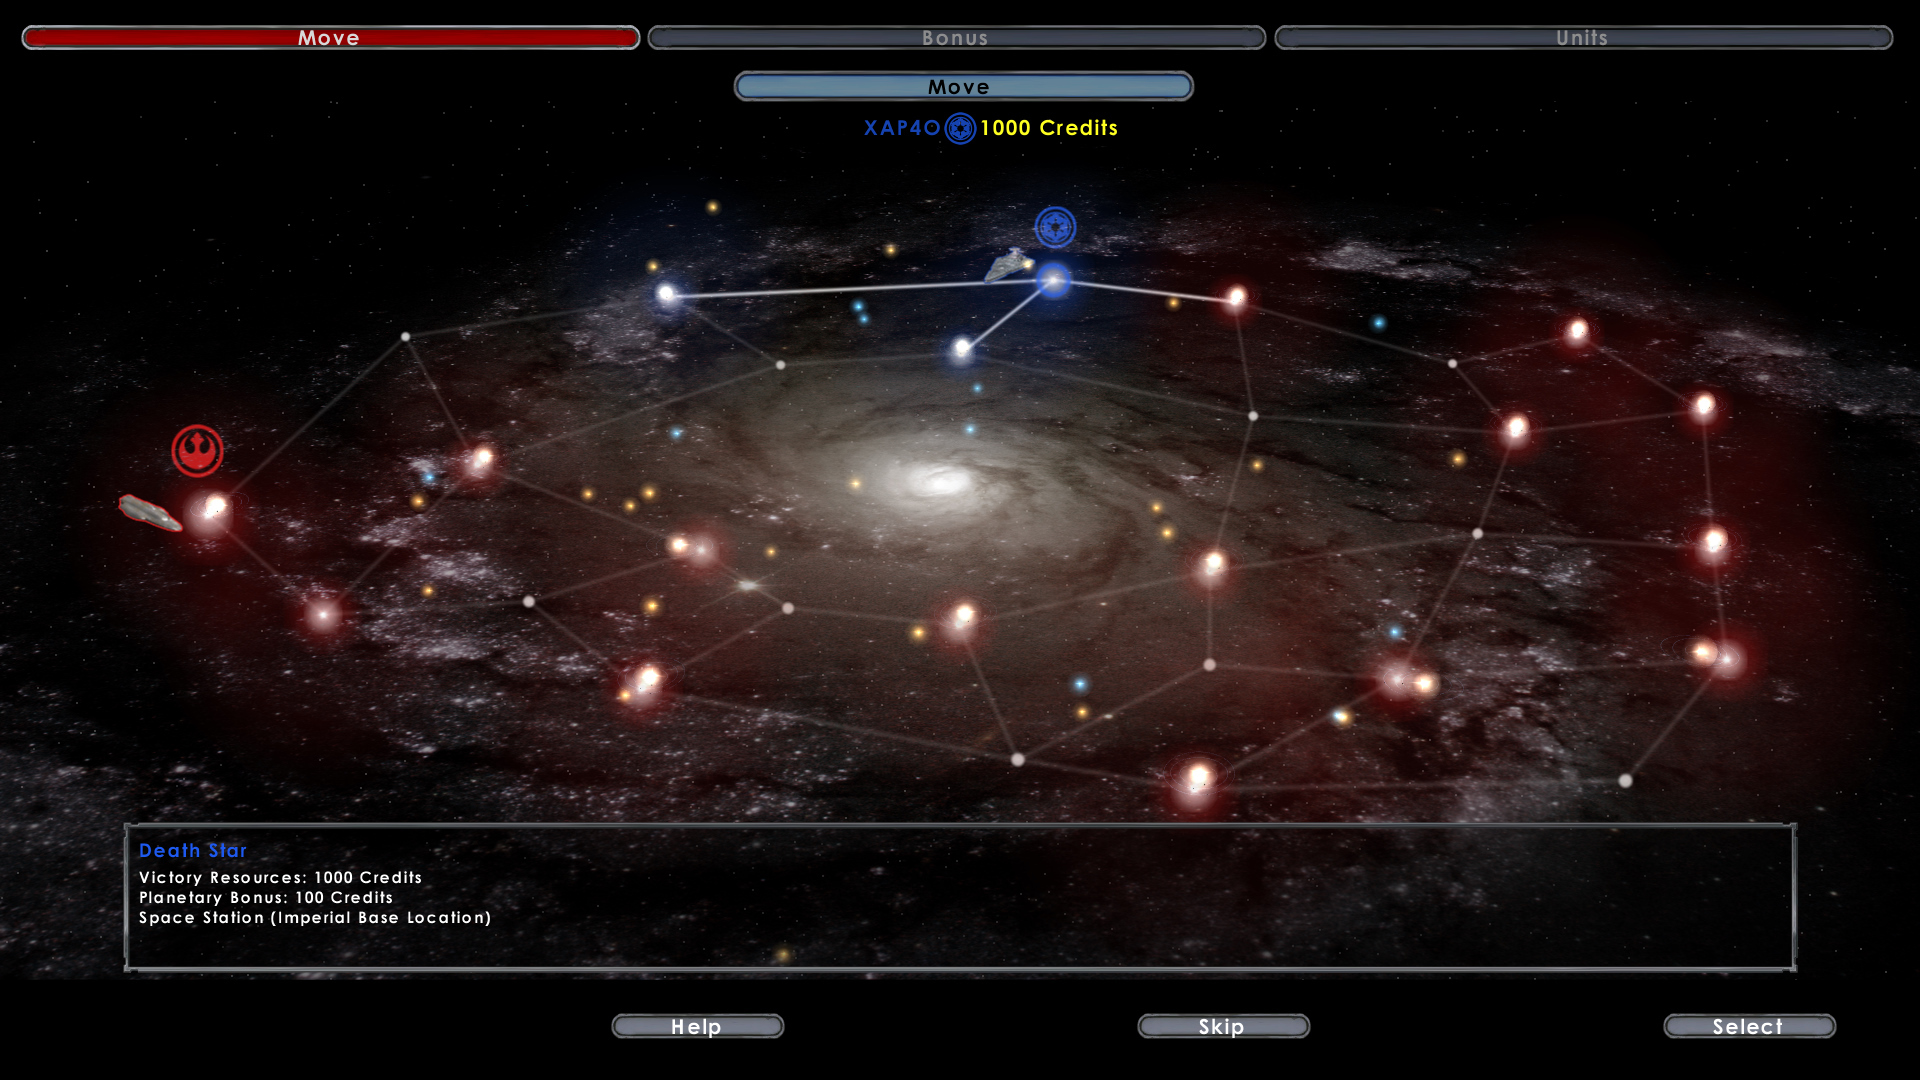 battlefront 2 custom galactic conquest